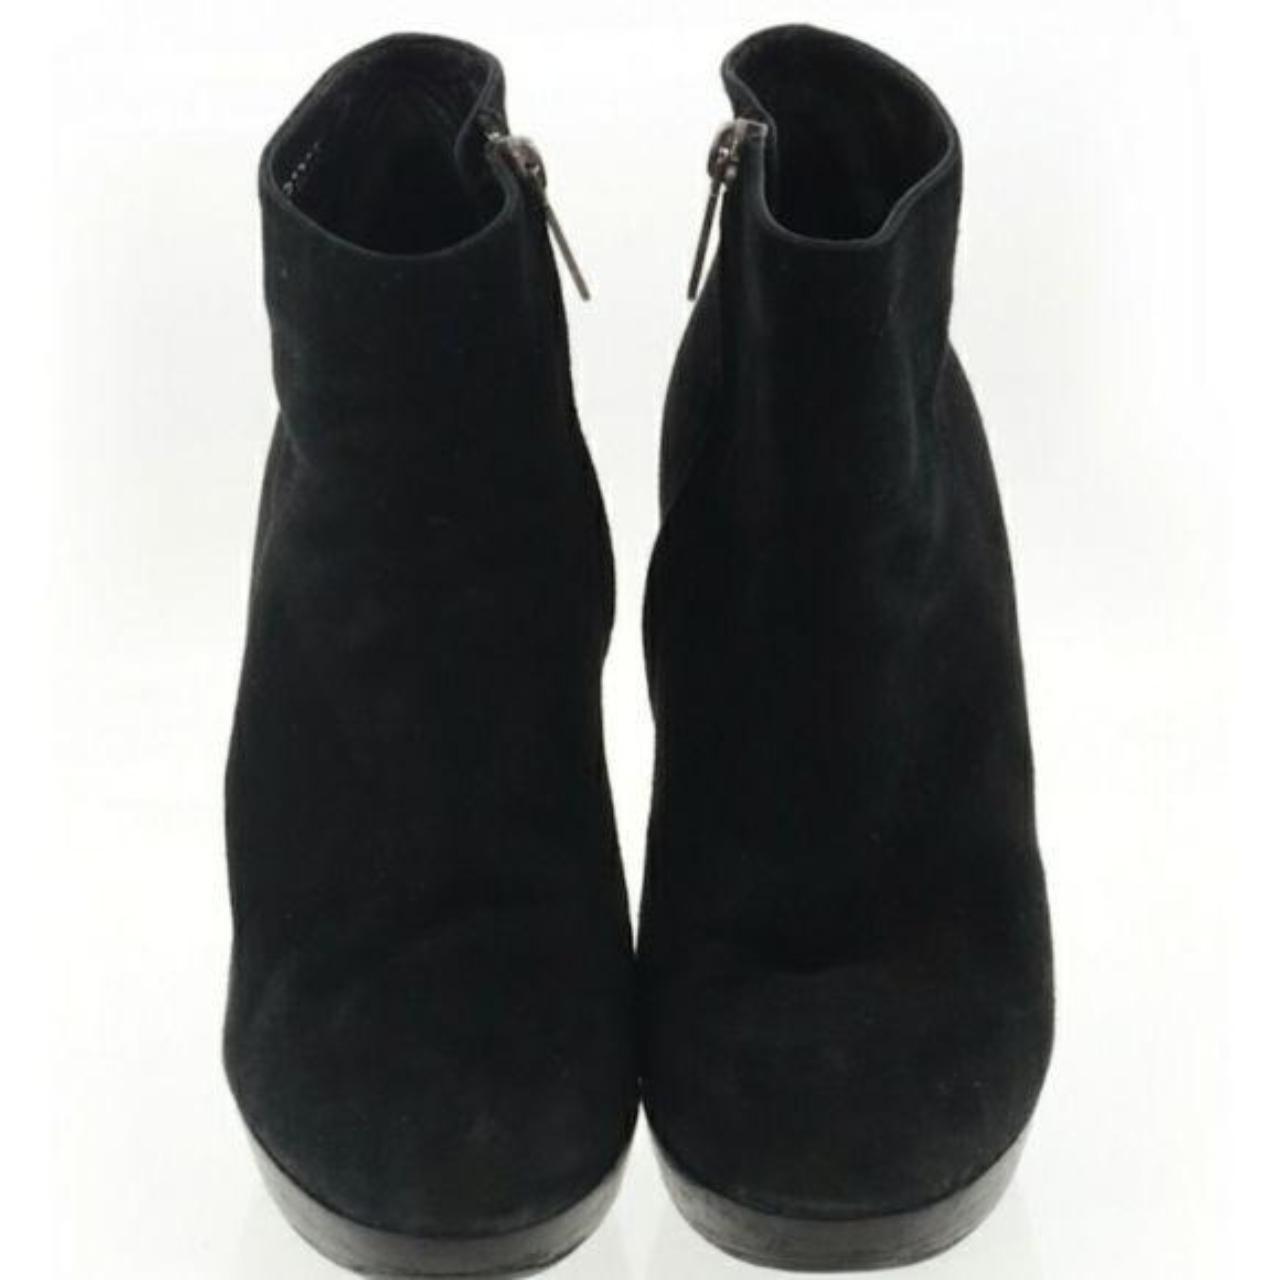 TR1206 black suede ankle booties stiletto heels... - Depop